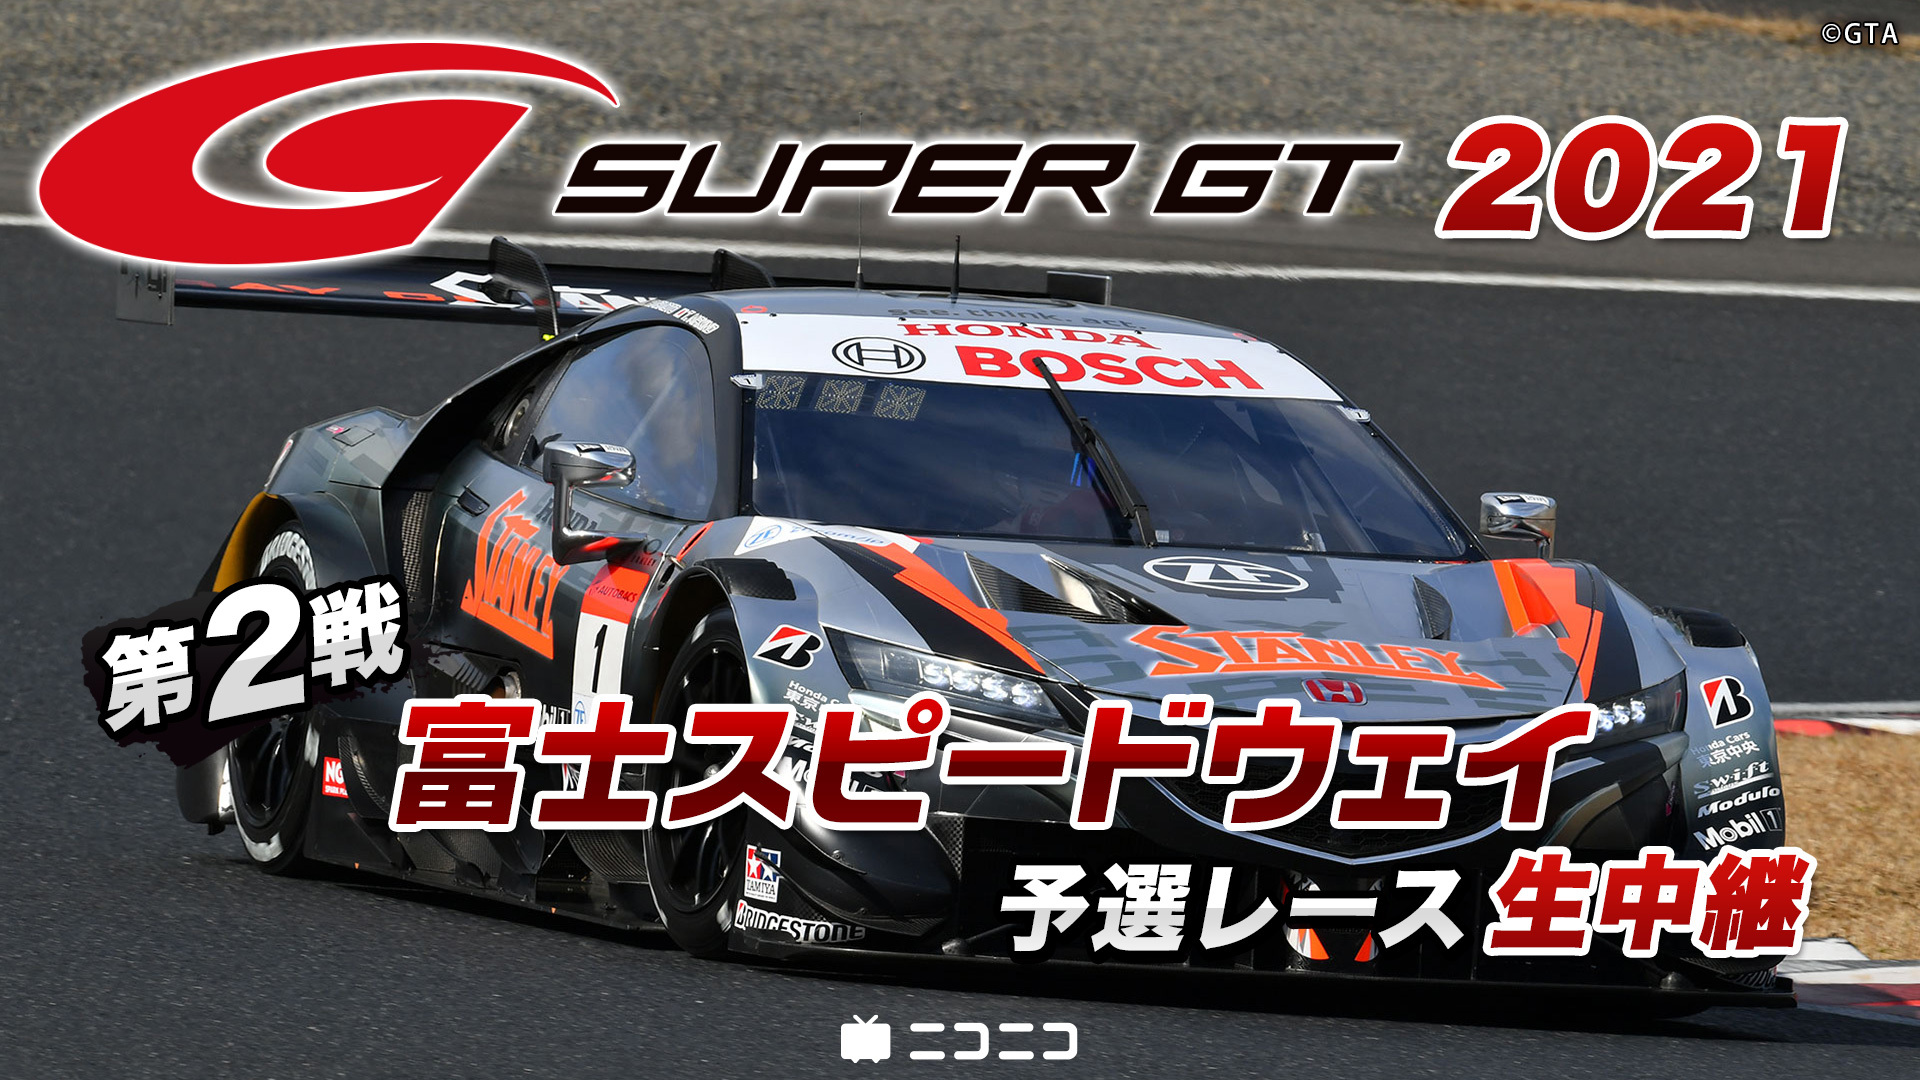 Super Gt 21 第2戦 富士スピードウェイ 予選レース生中継 21 05 03 月 14 開始 ニコニコ生放送